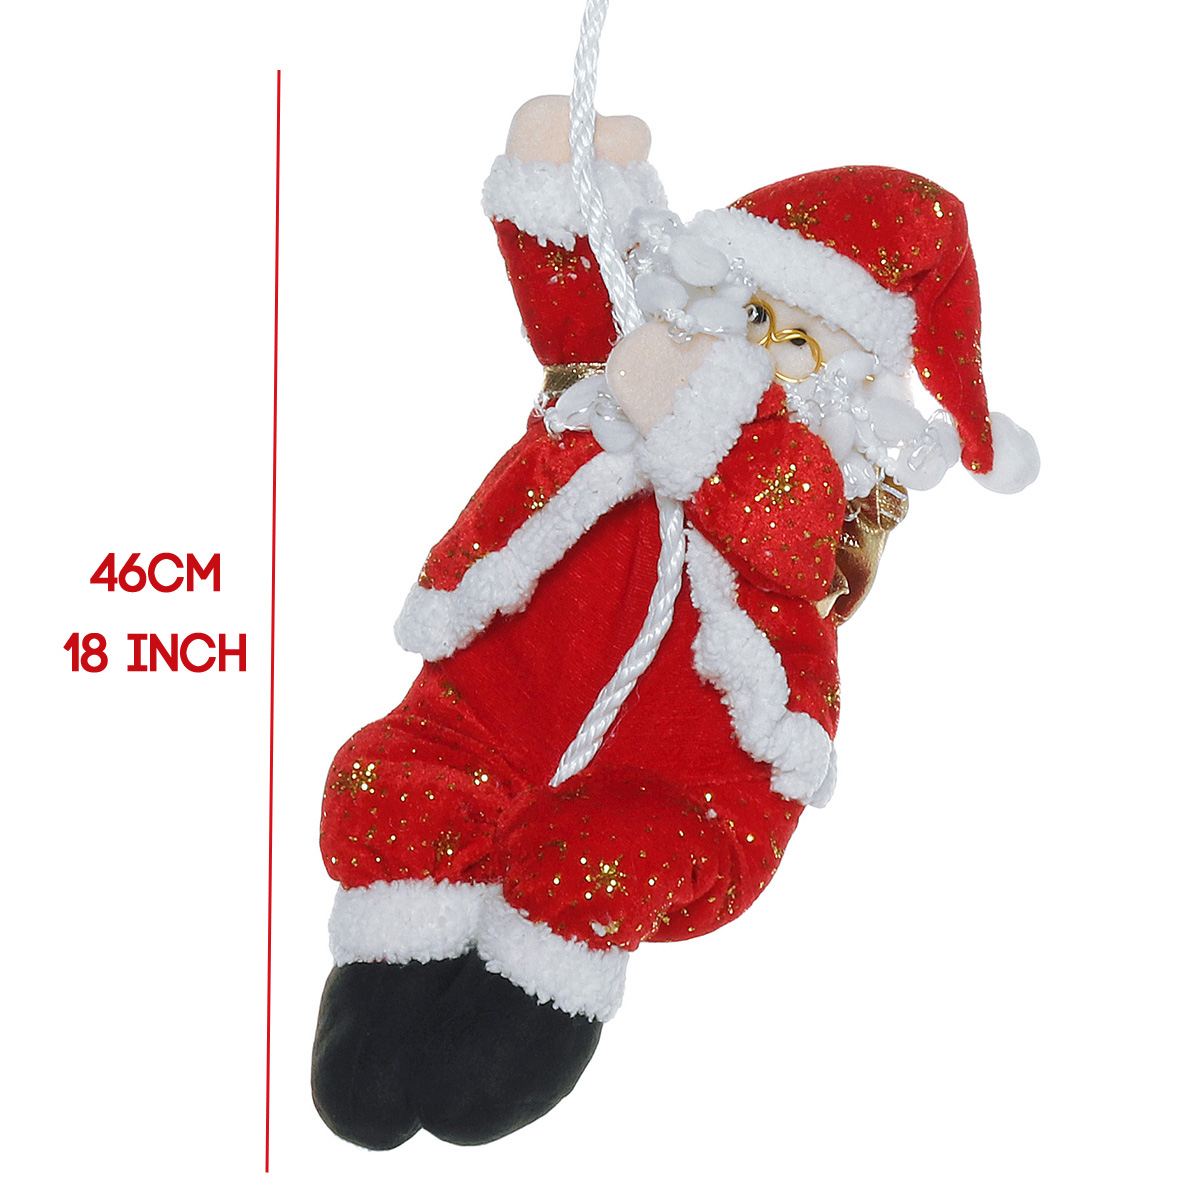 Santa-Climbing-On-Rope-Indoor-Outdoor-Christmas-Tree-Garden-Decorations-1590884-8